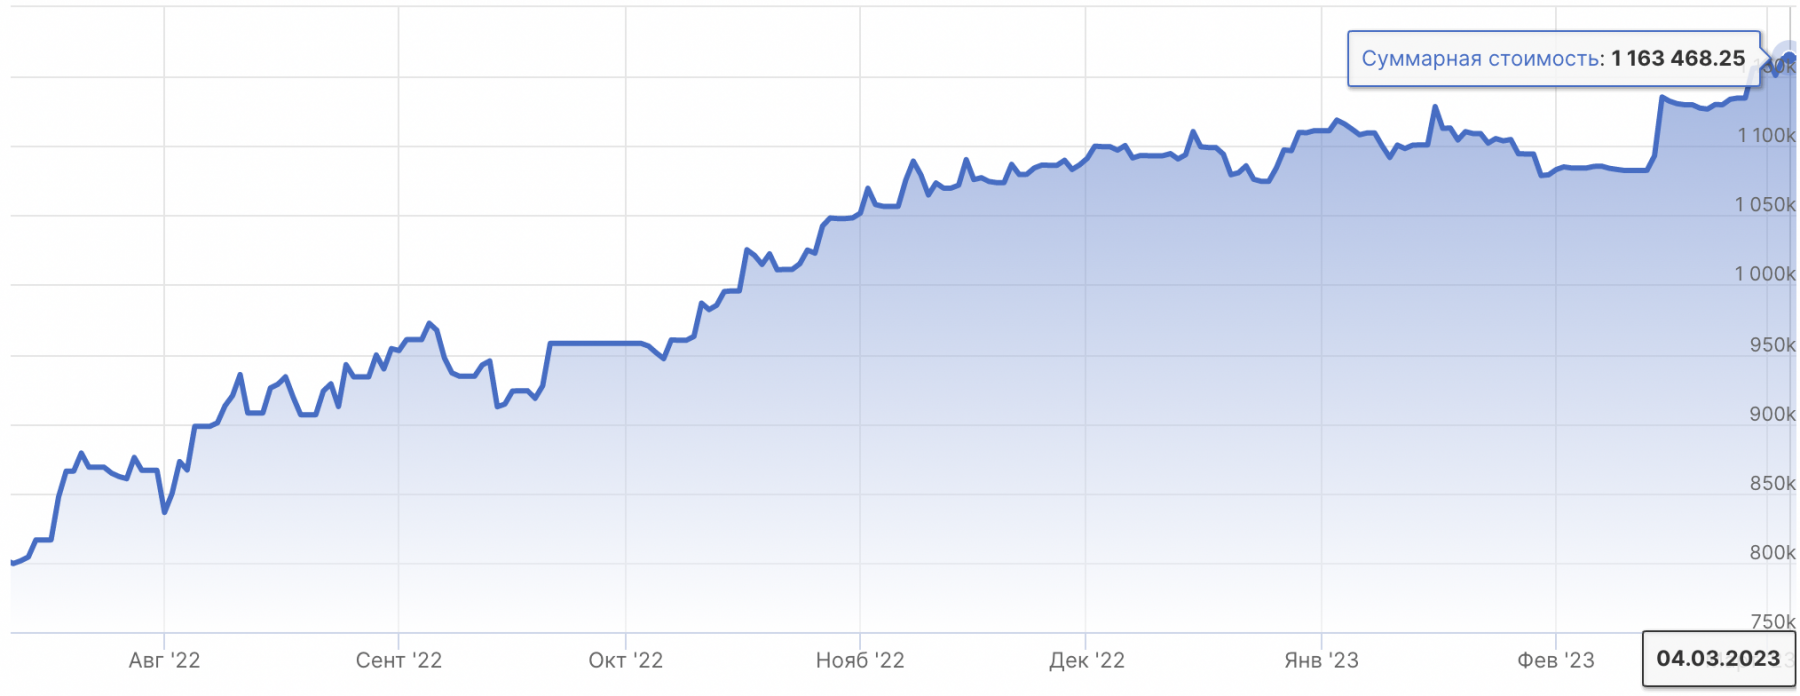 Итоги недели на рынке акций РФ: +29 793,8 руб.